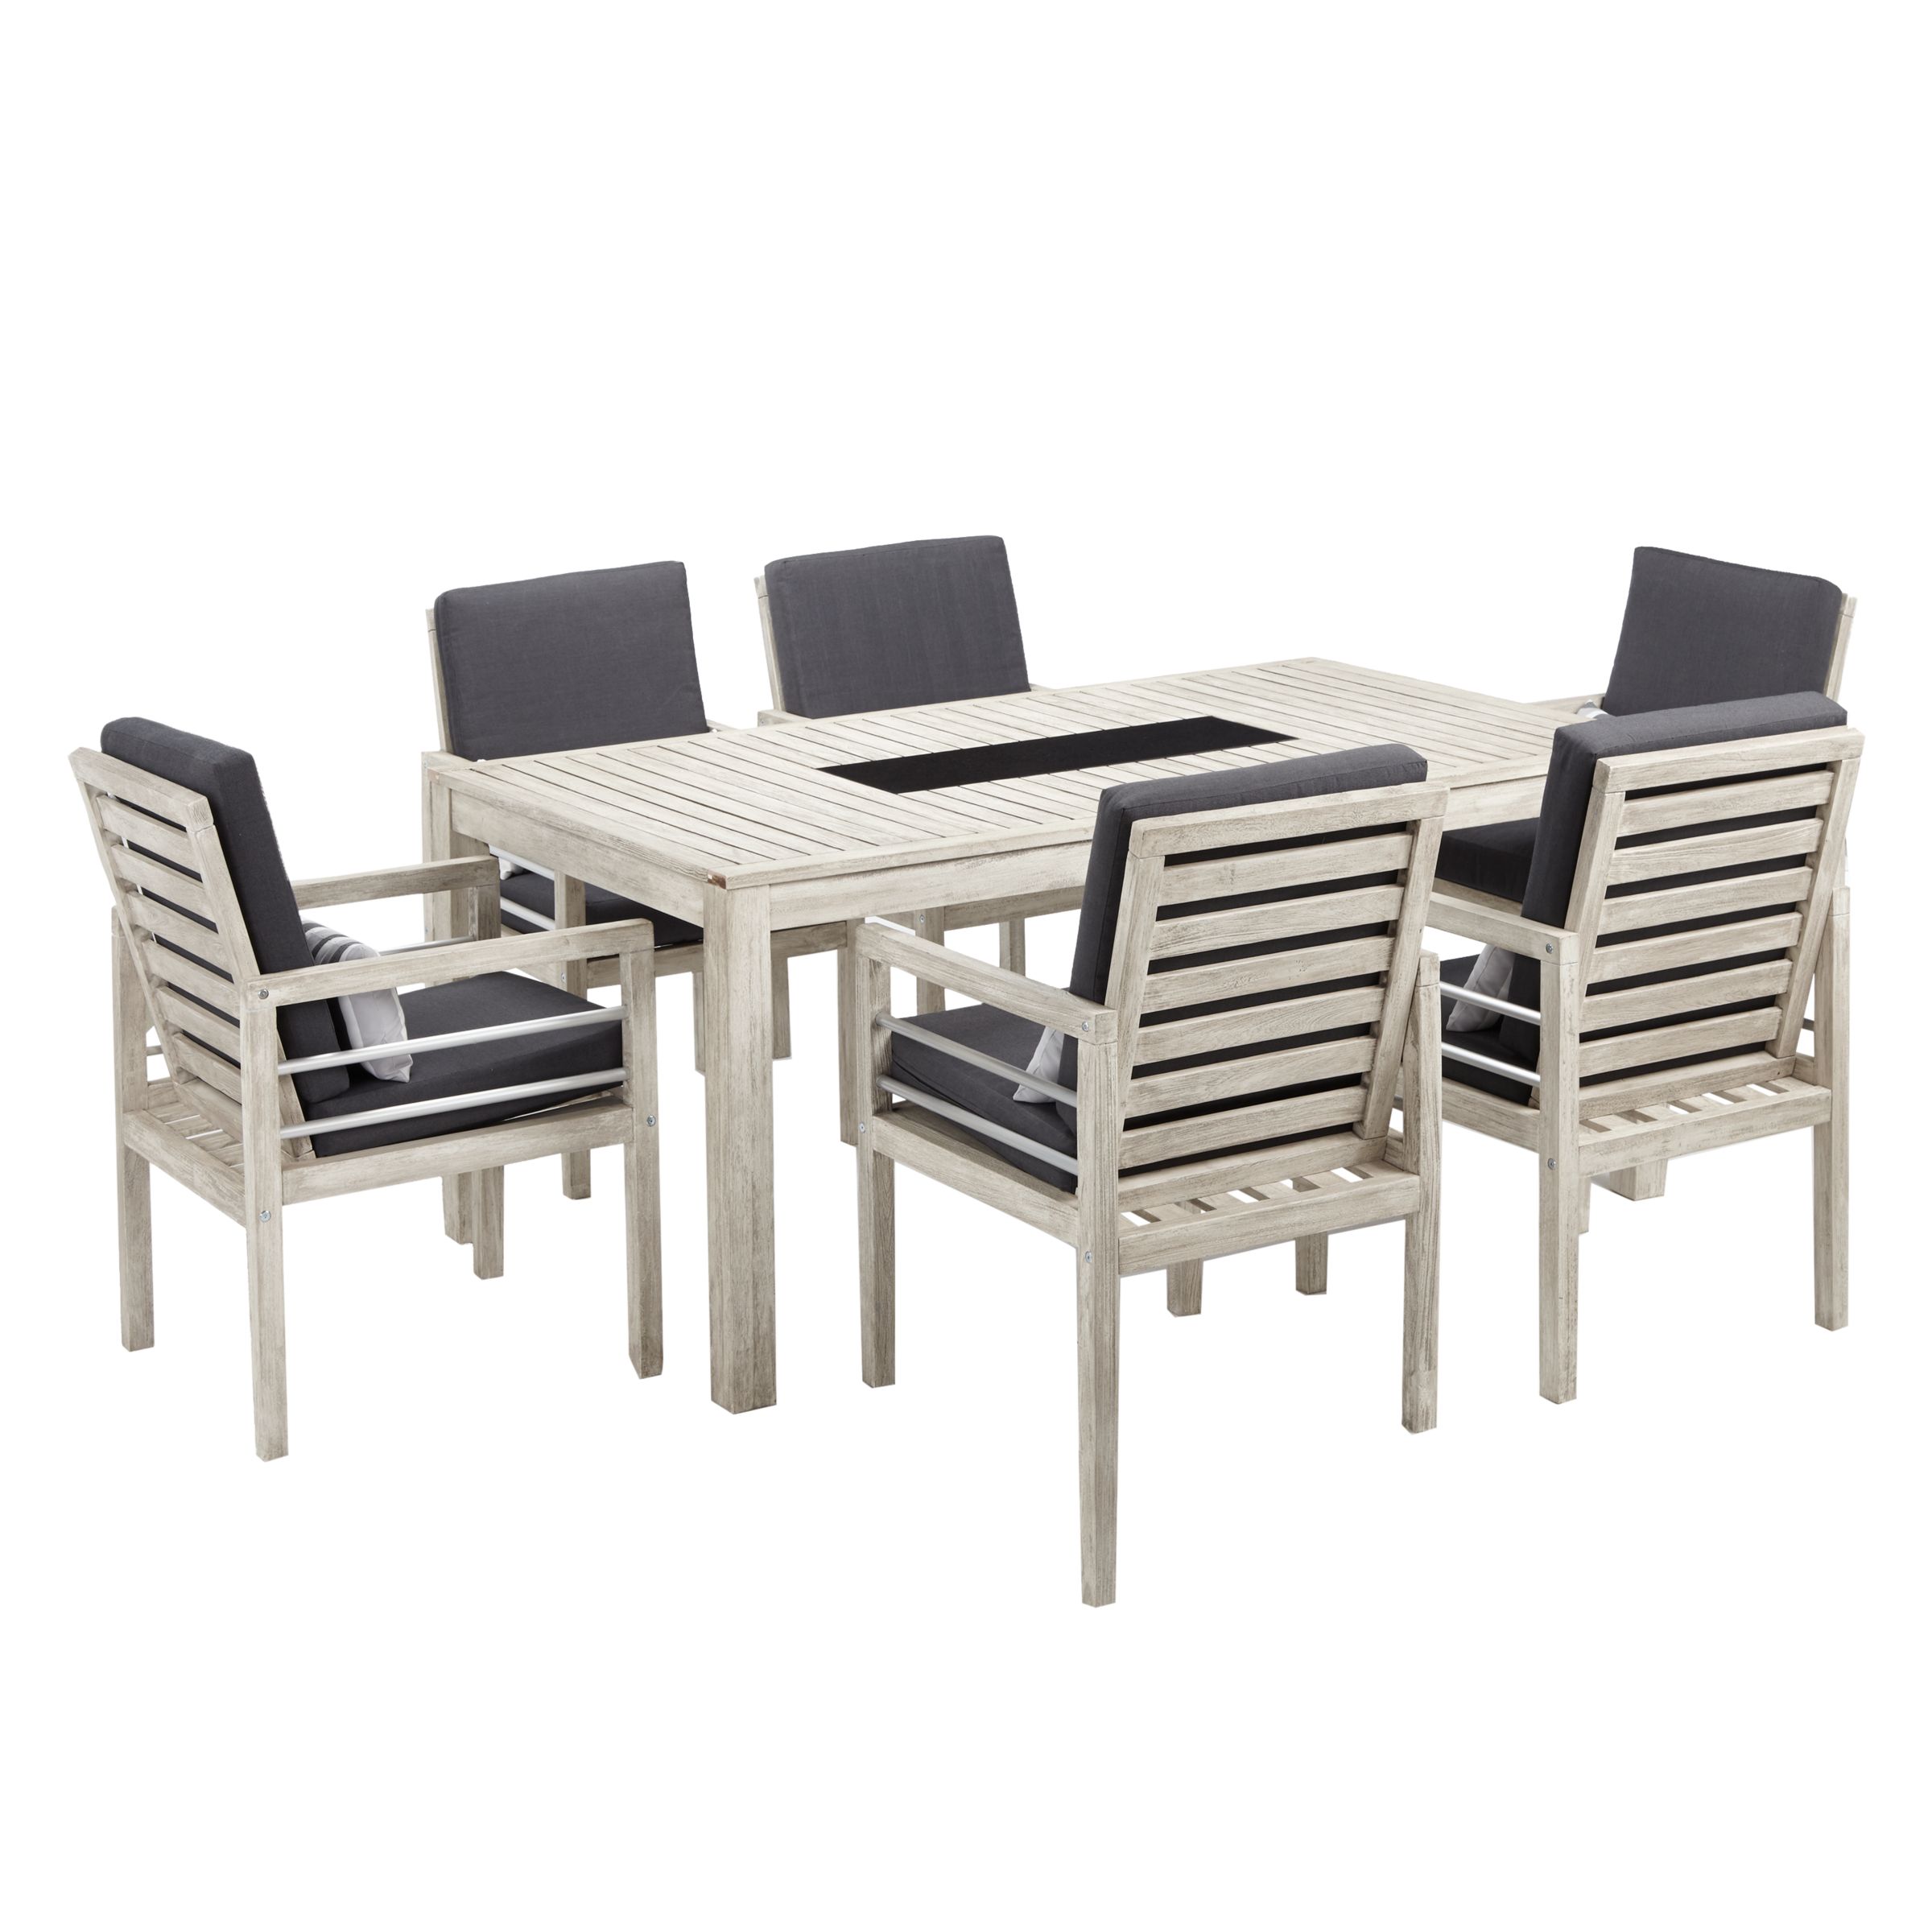 John Lewis Partners Atlantic 6 Seater Dining Chair Table Set